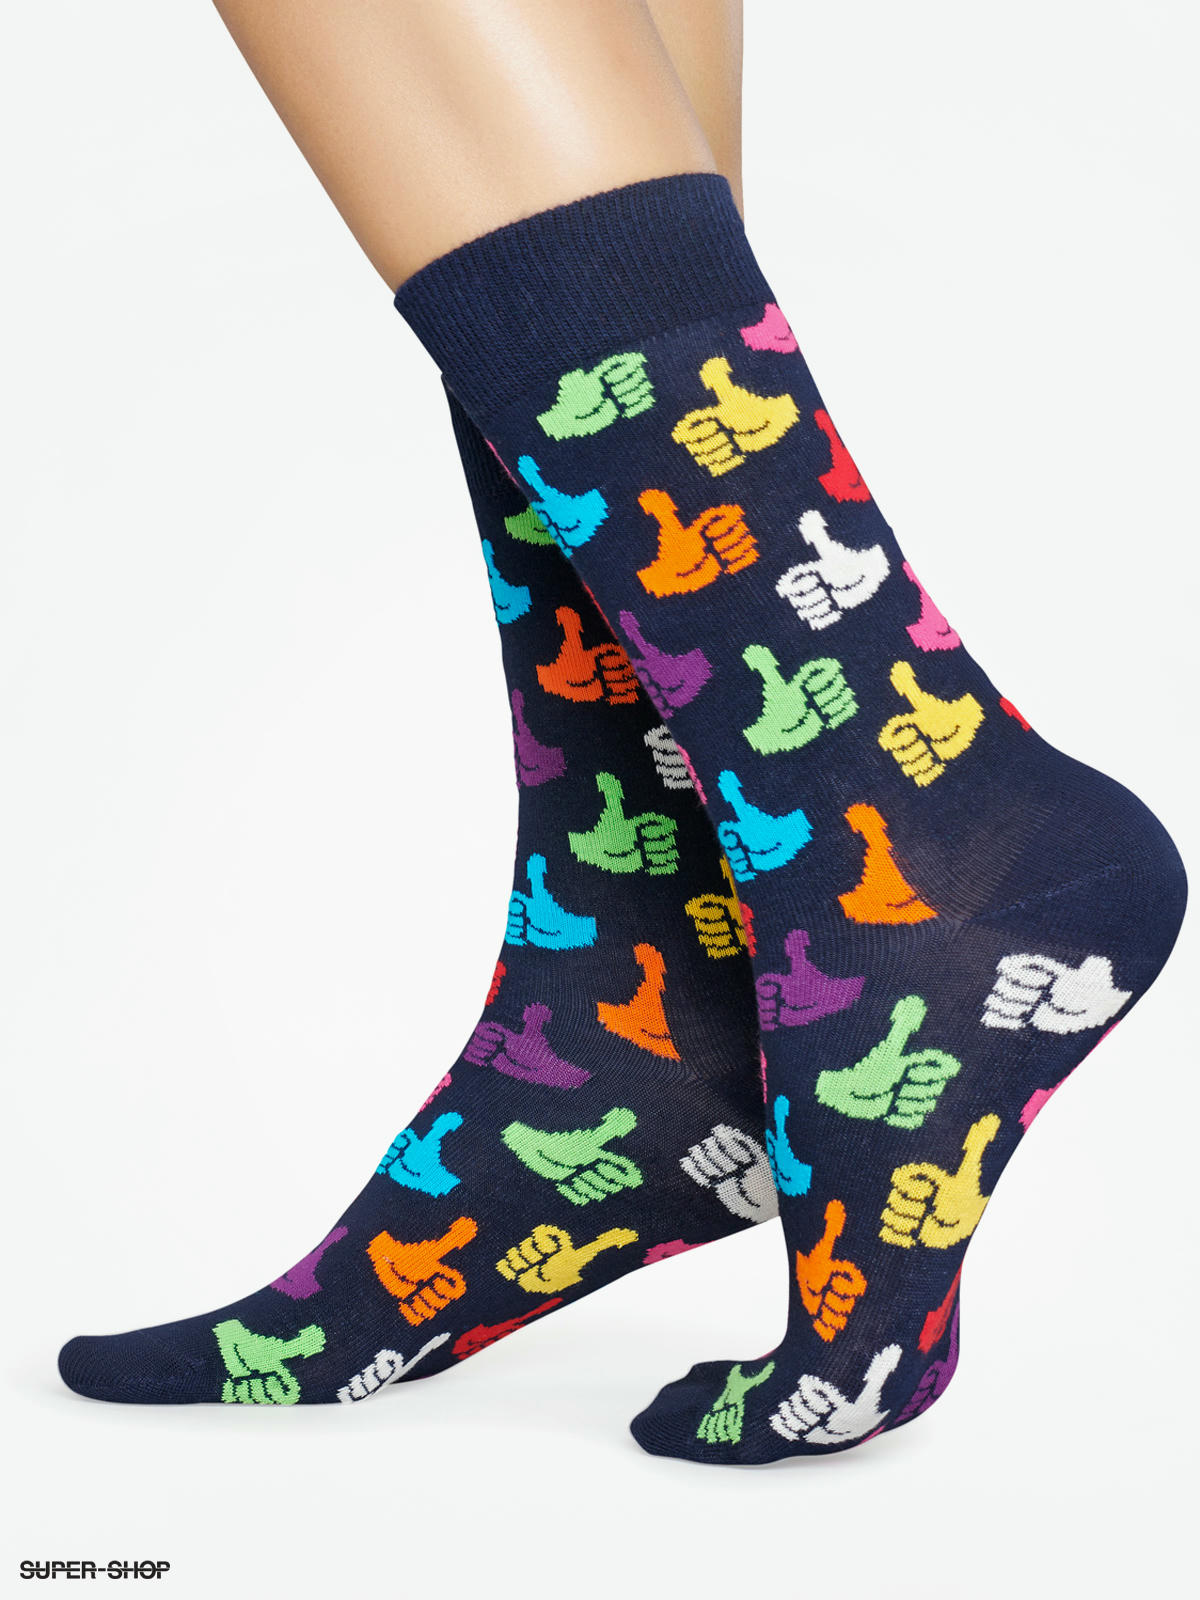 https://static.super-shop.com/1060422-happy-socks-thumbs-up-socks-navy.jpg?w=1920